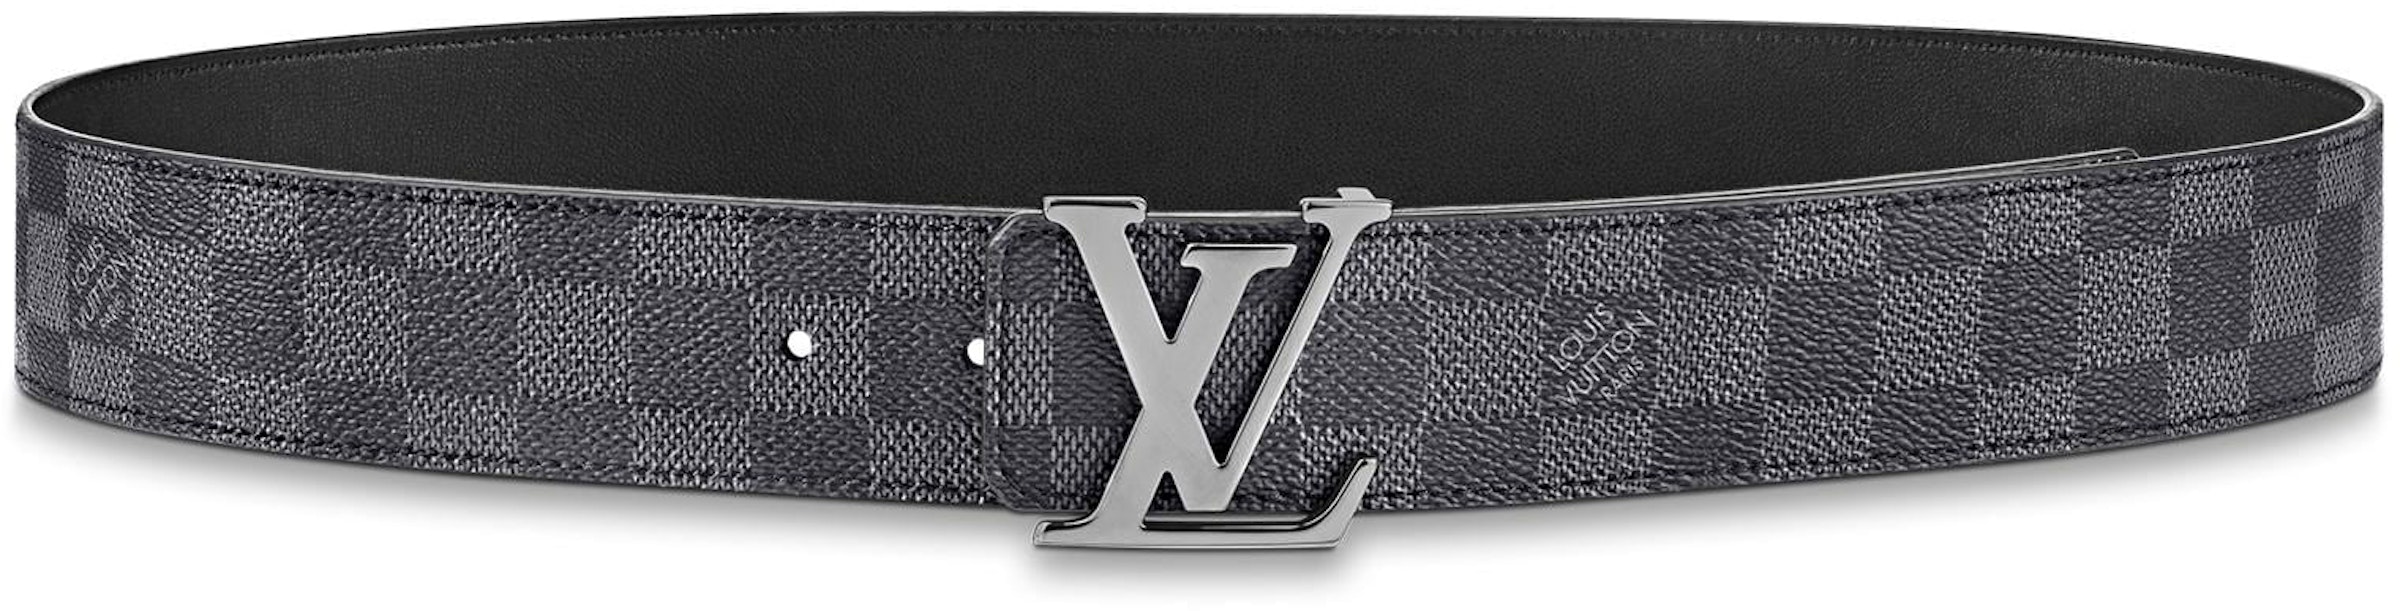 Real Louis Vuitton Belt Black